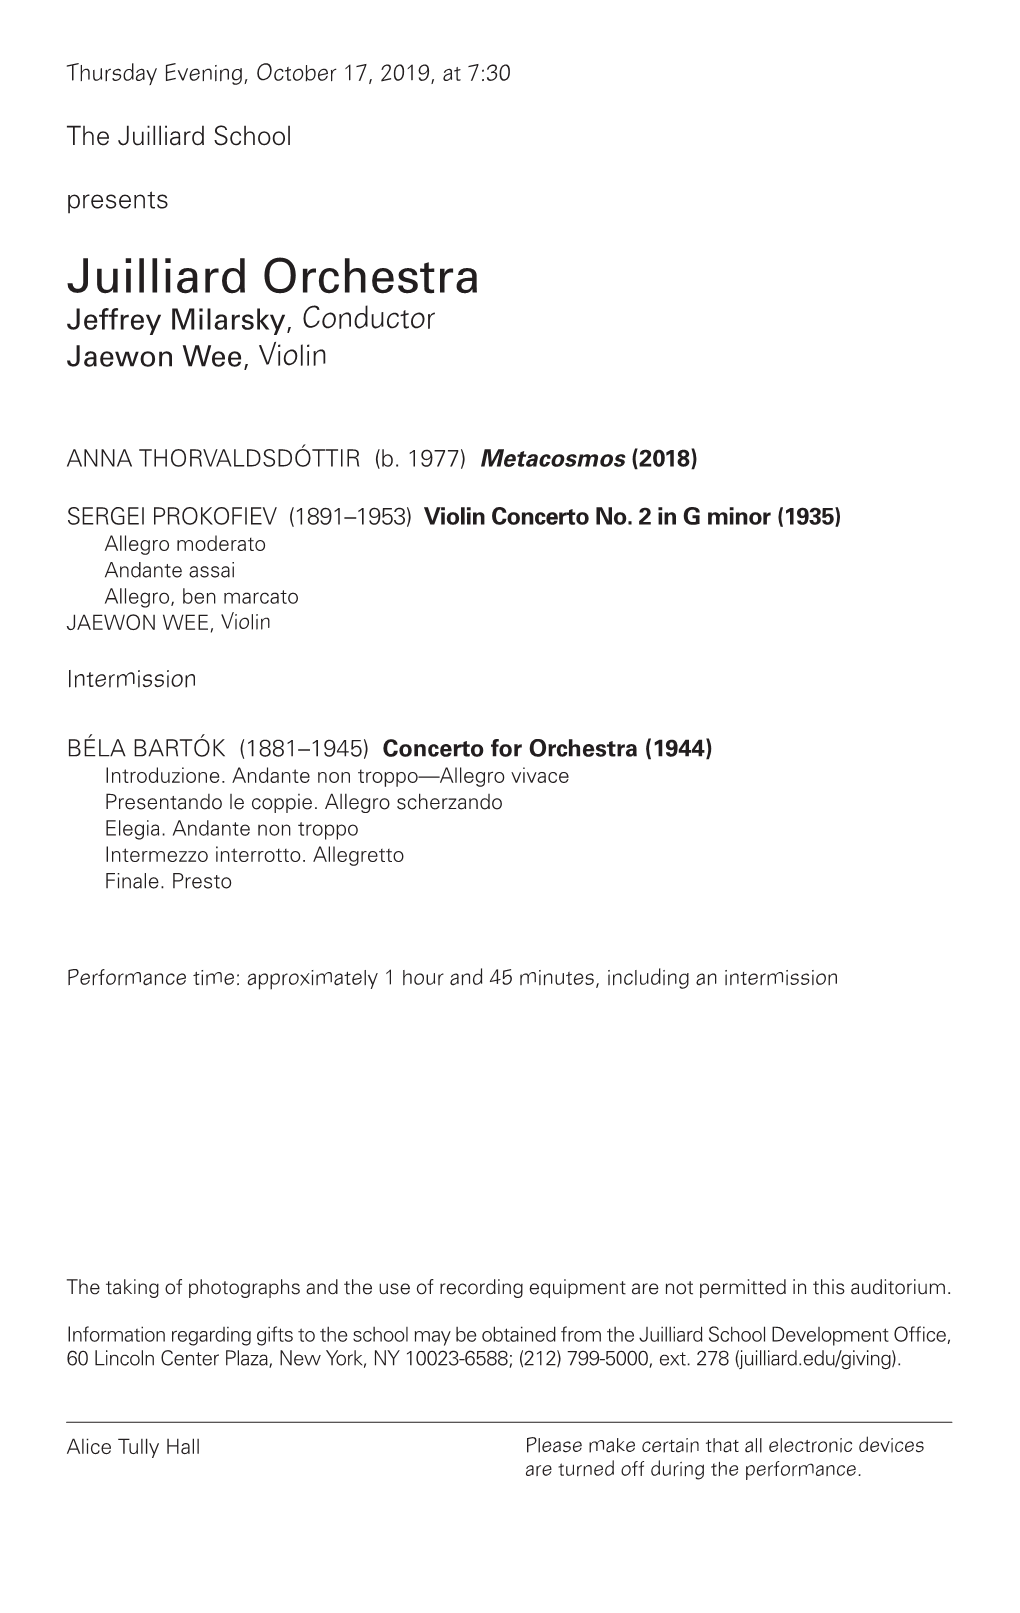 Juilliard Orchestra Jeffrey Milarsky, Conductor Jaewon Wee, Violin